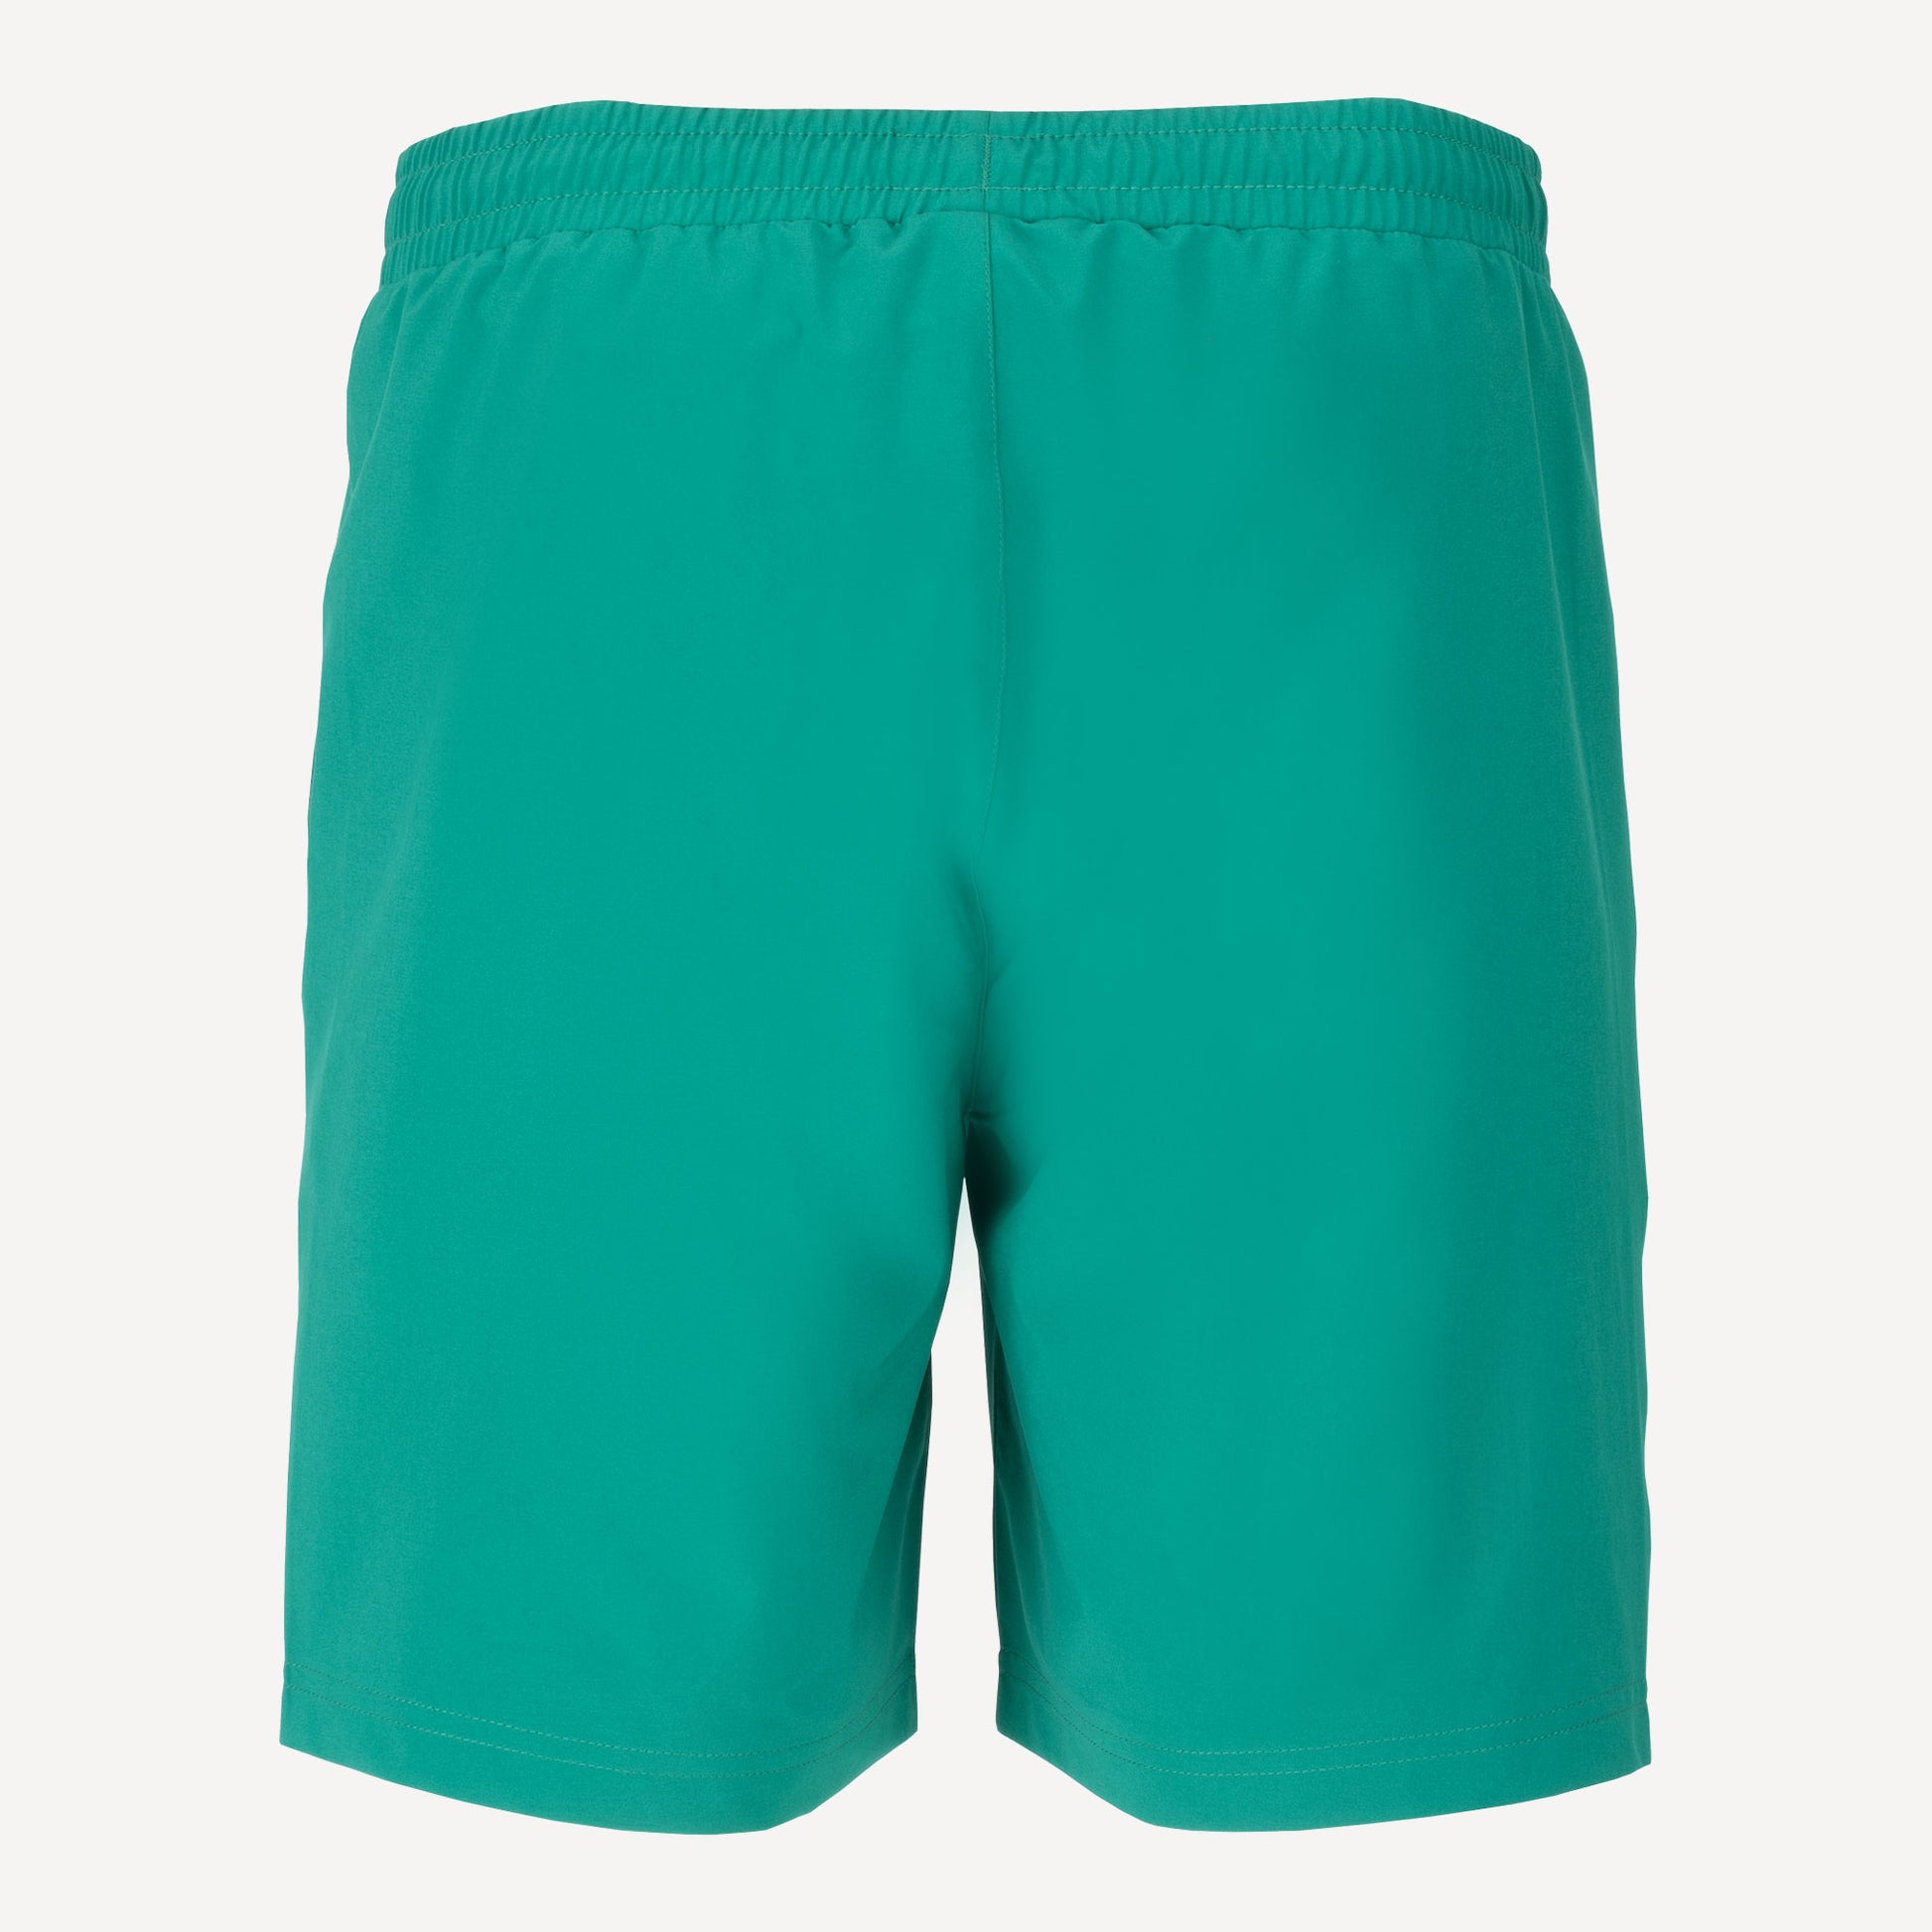 Fila Amari Men's Tennis Shorts Green (2)